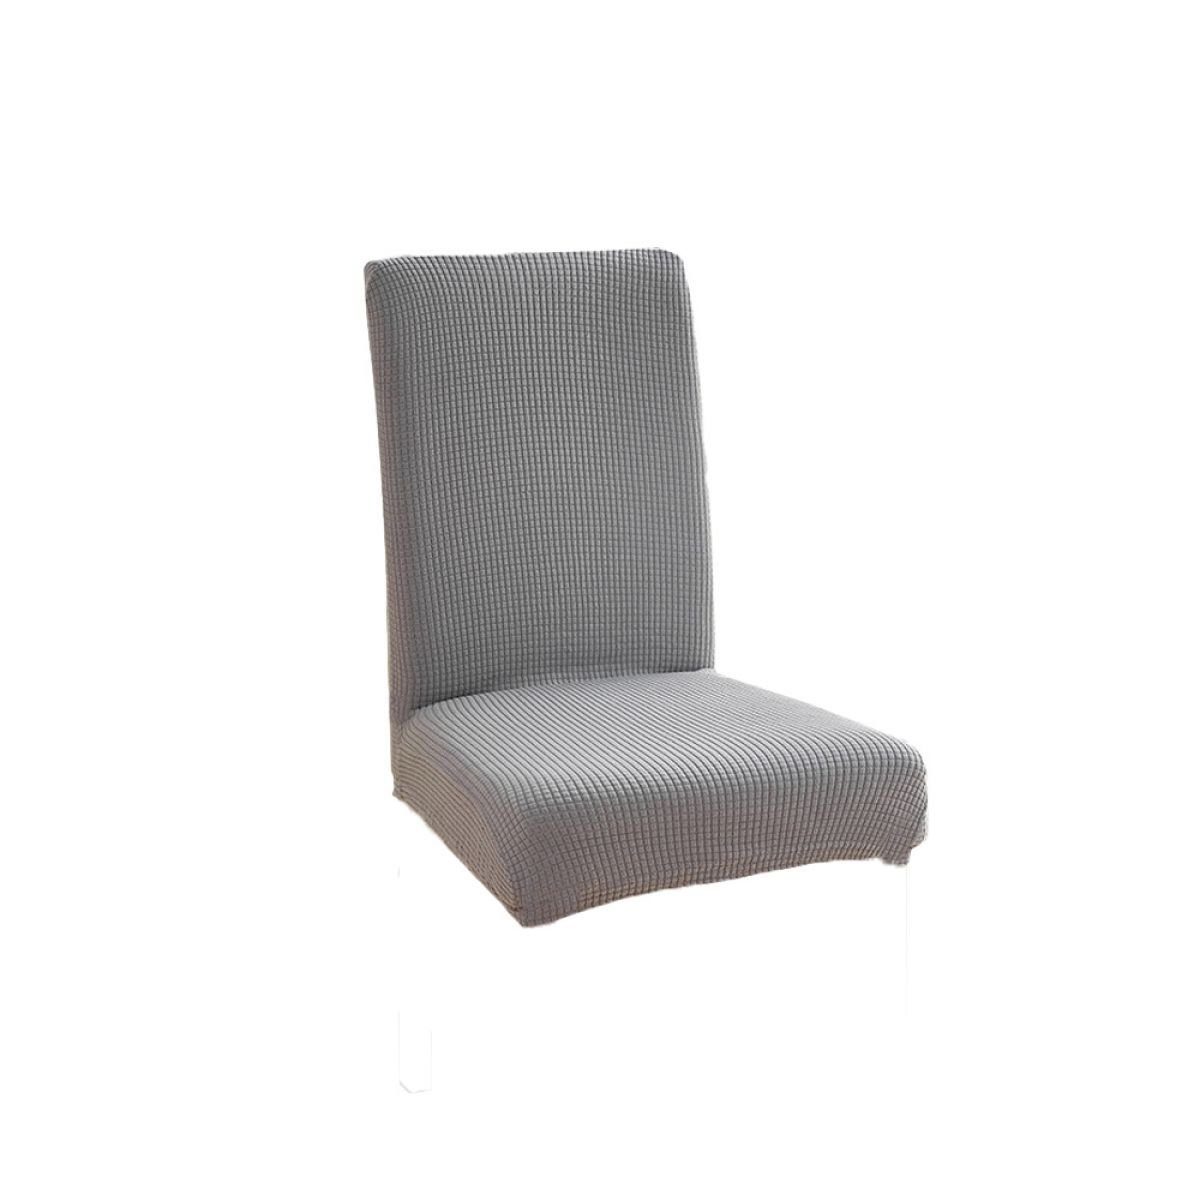 Abnehmbare Esszimmerstühle, Stretch Stuhlbezug Waschbar Stuhlbezug Juoungle für grau